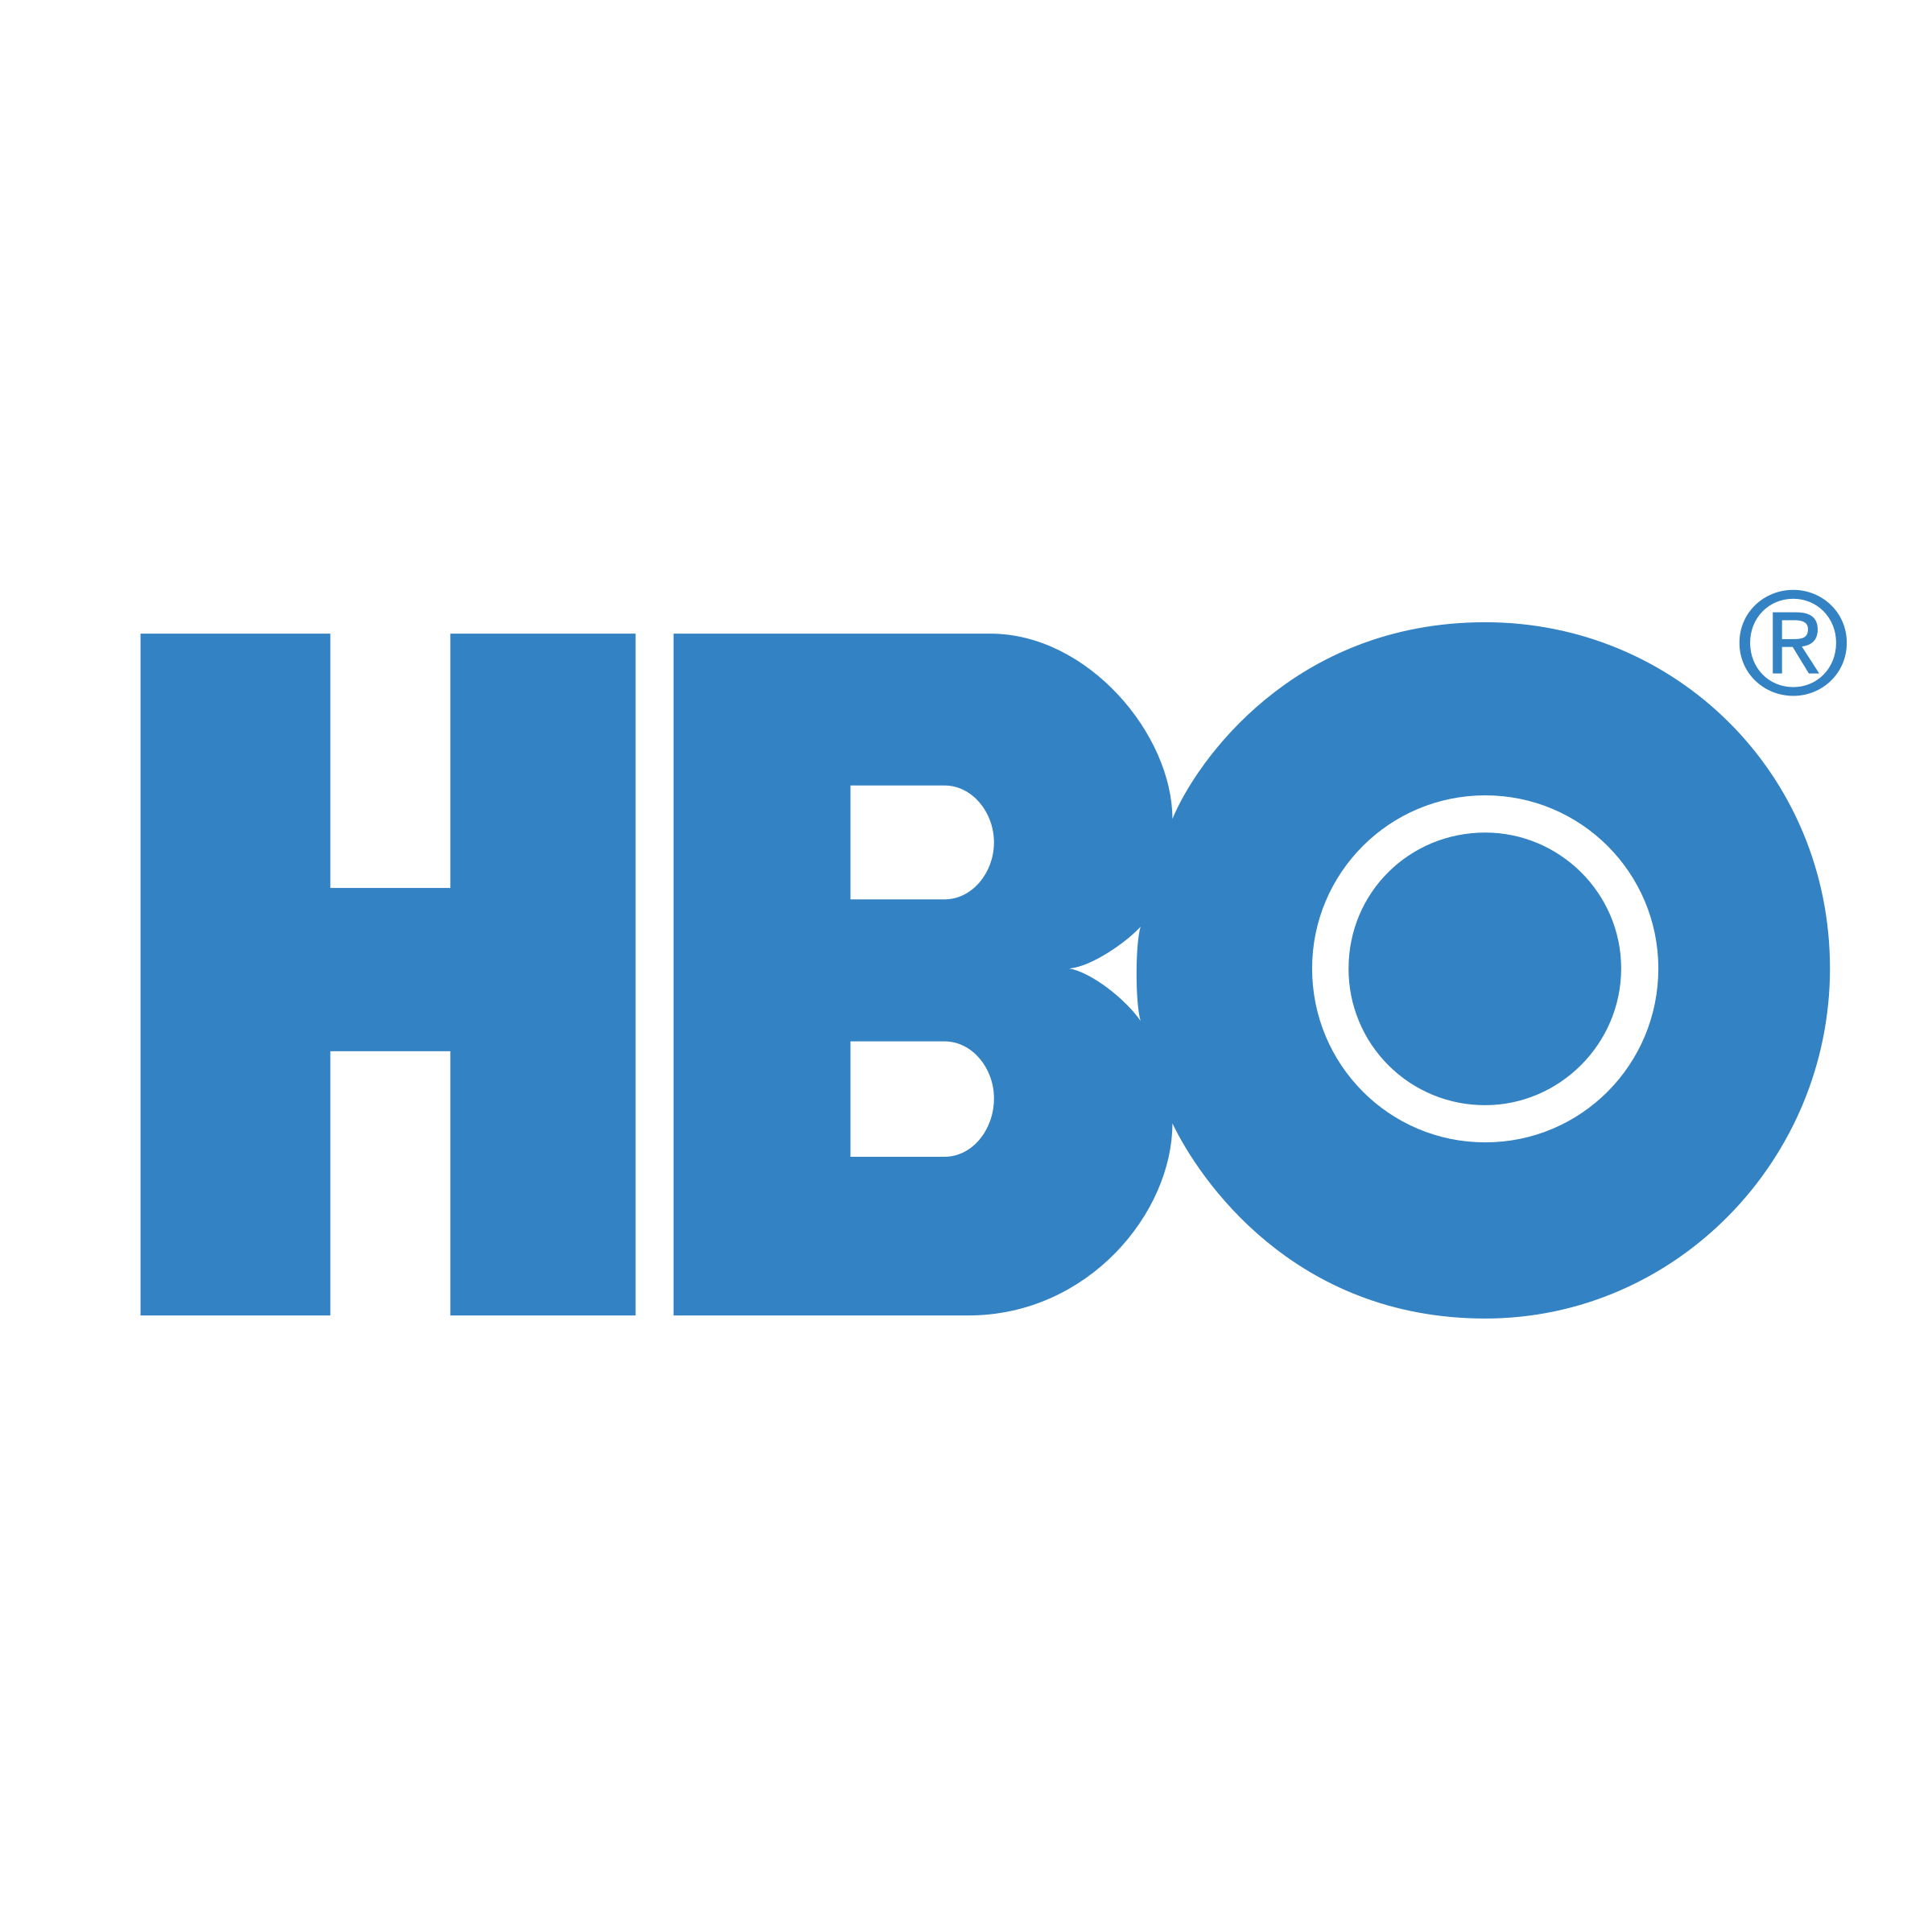 hbo-logo-png-transparent.png